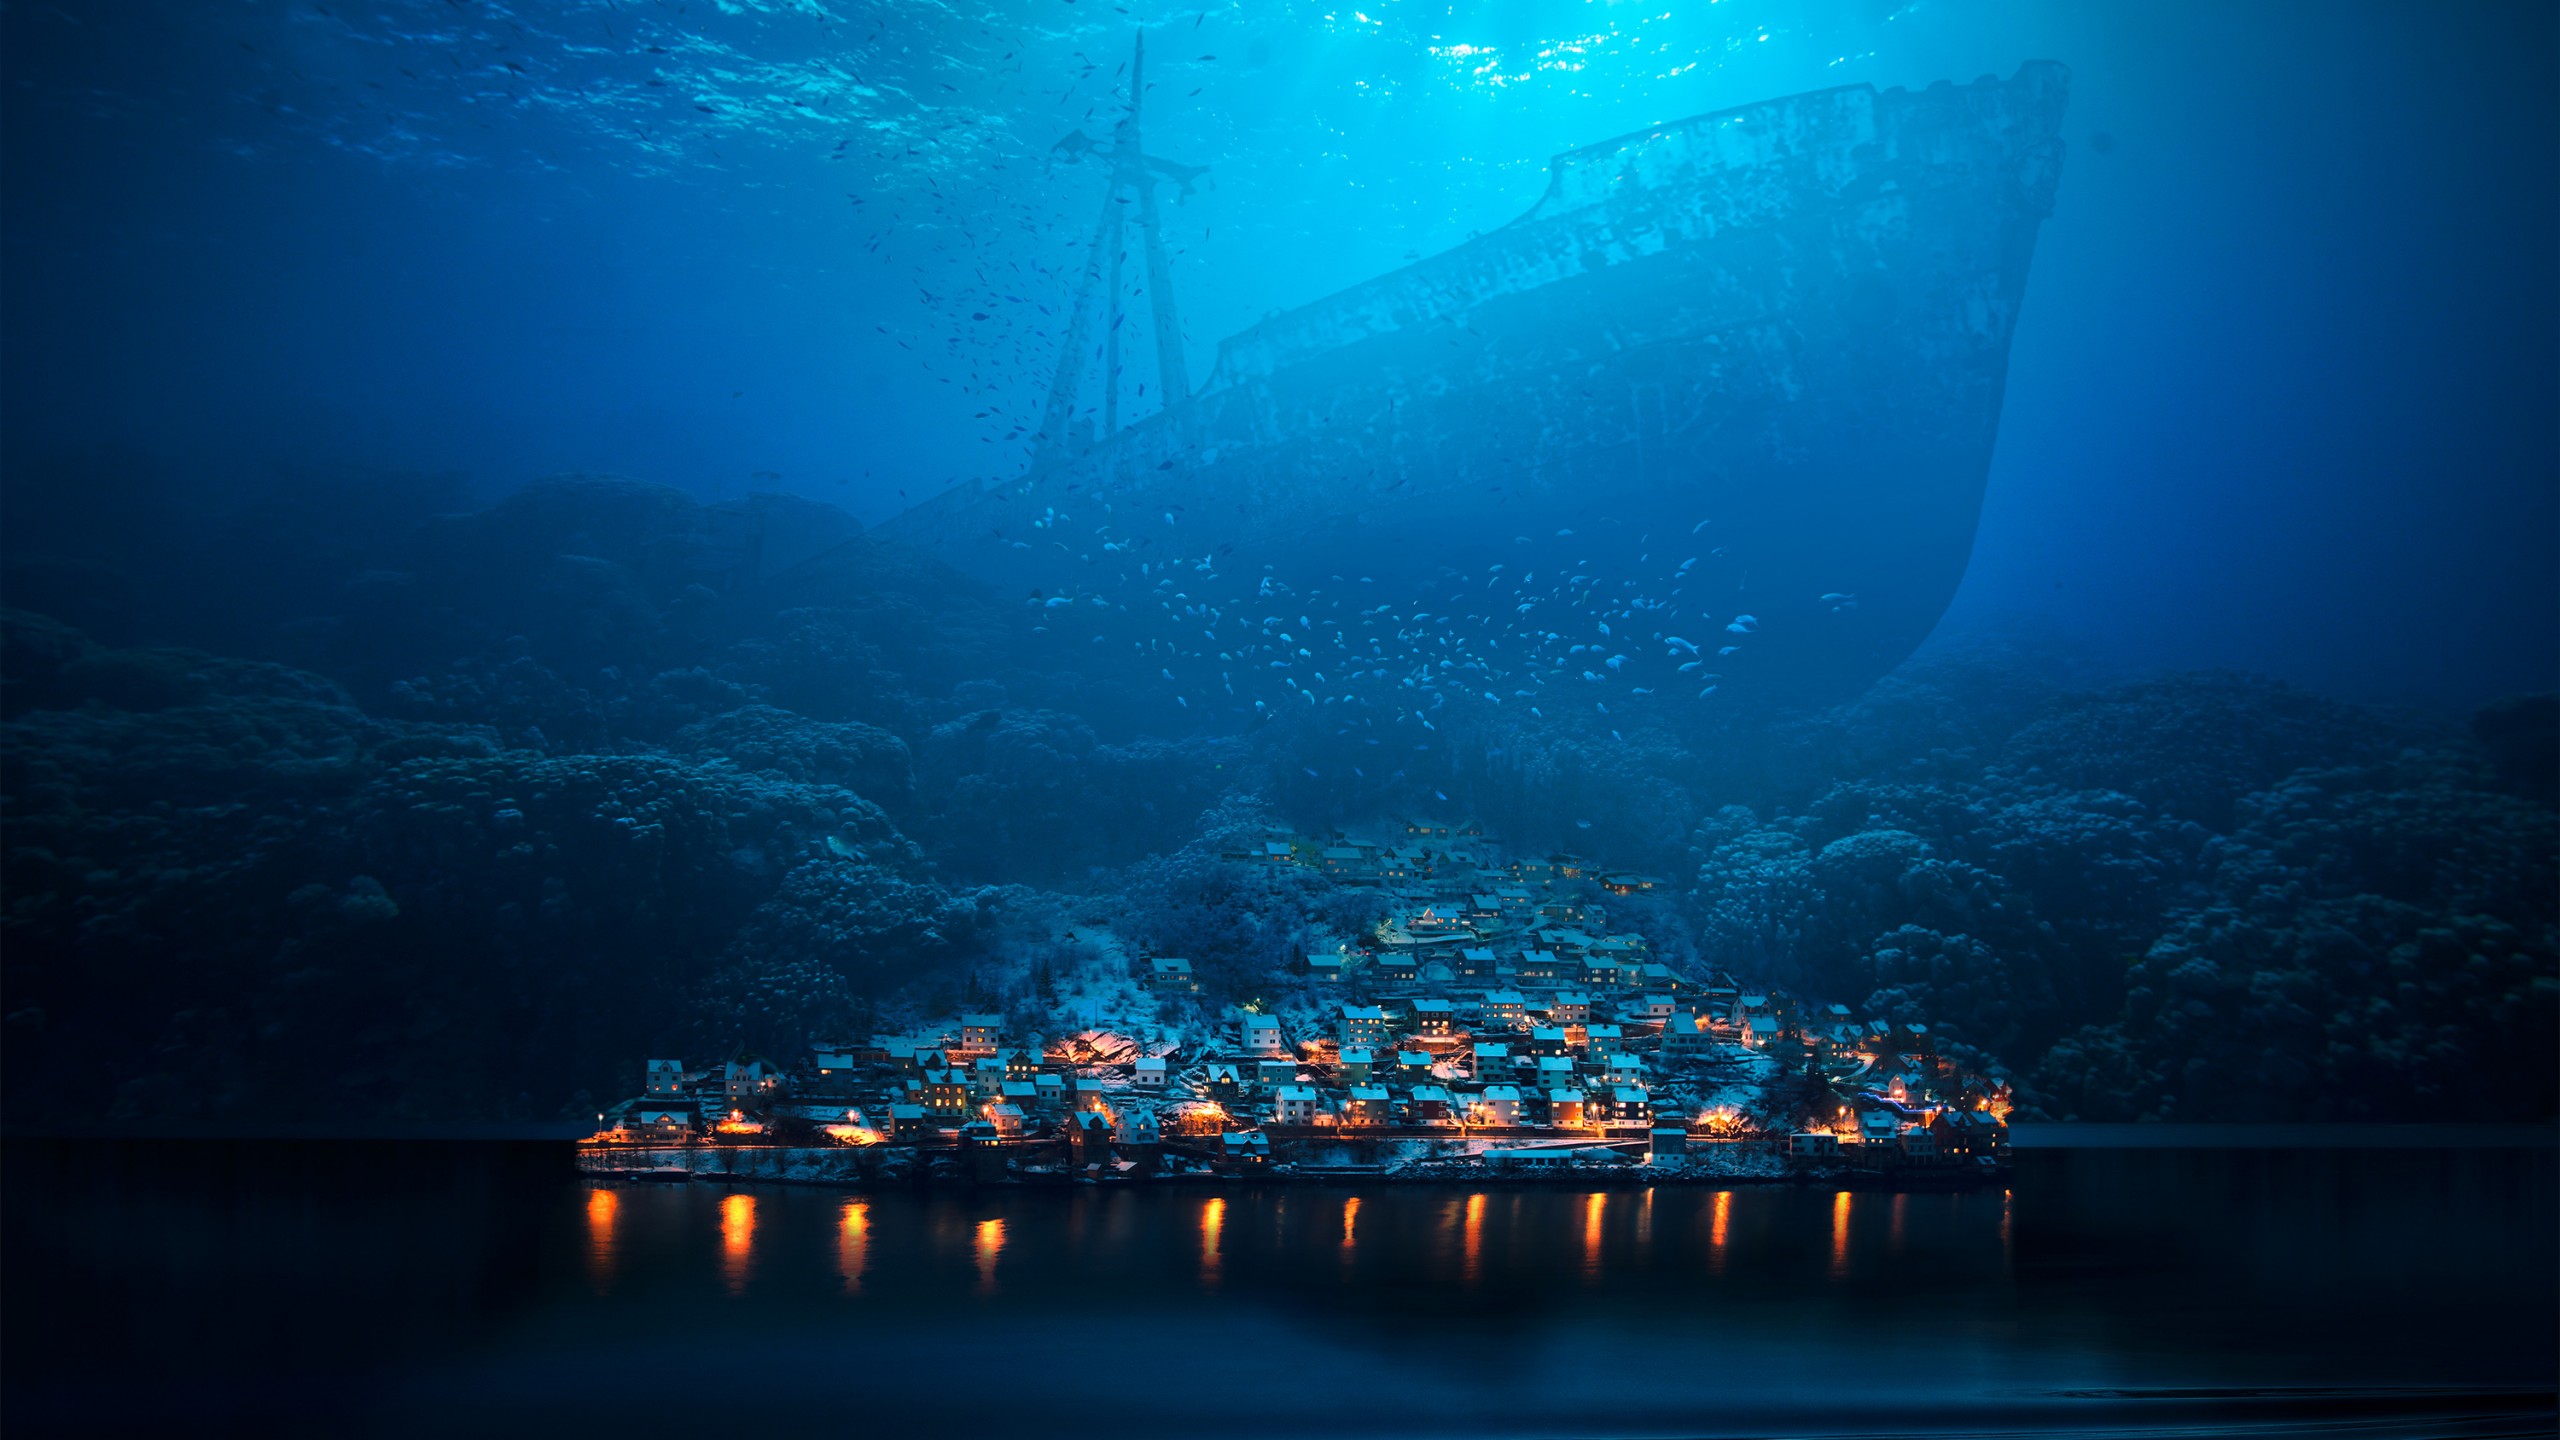 Underwater Ship Shipwreck Abyss Fish Sea Town Night Fantasy Art Photo Manipulation Surreal Blue Cyan 2560x1440